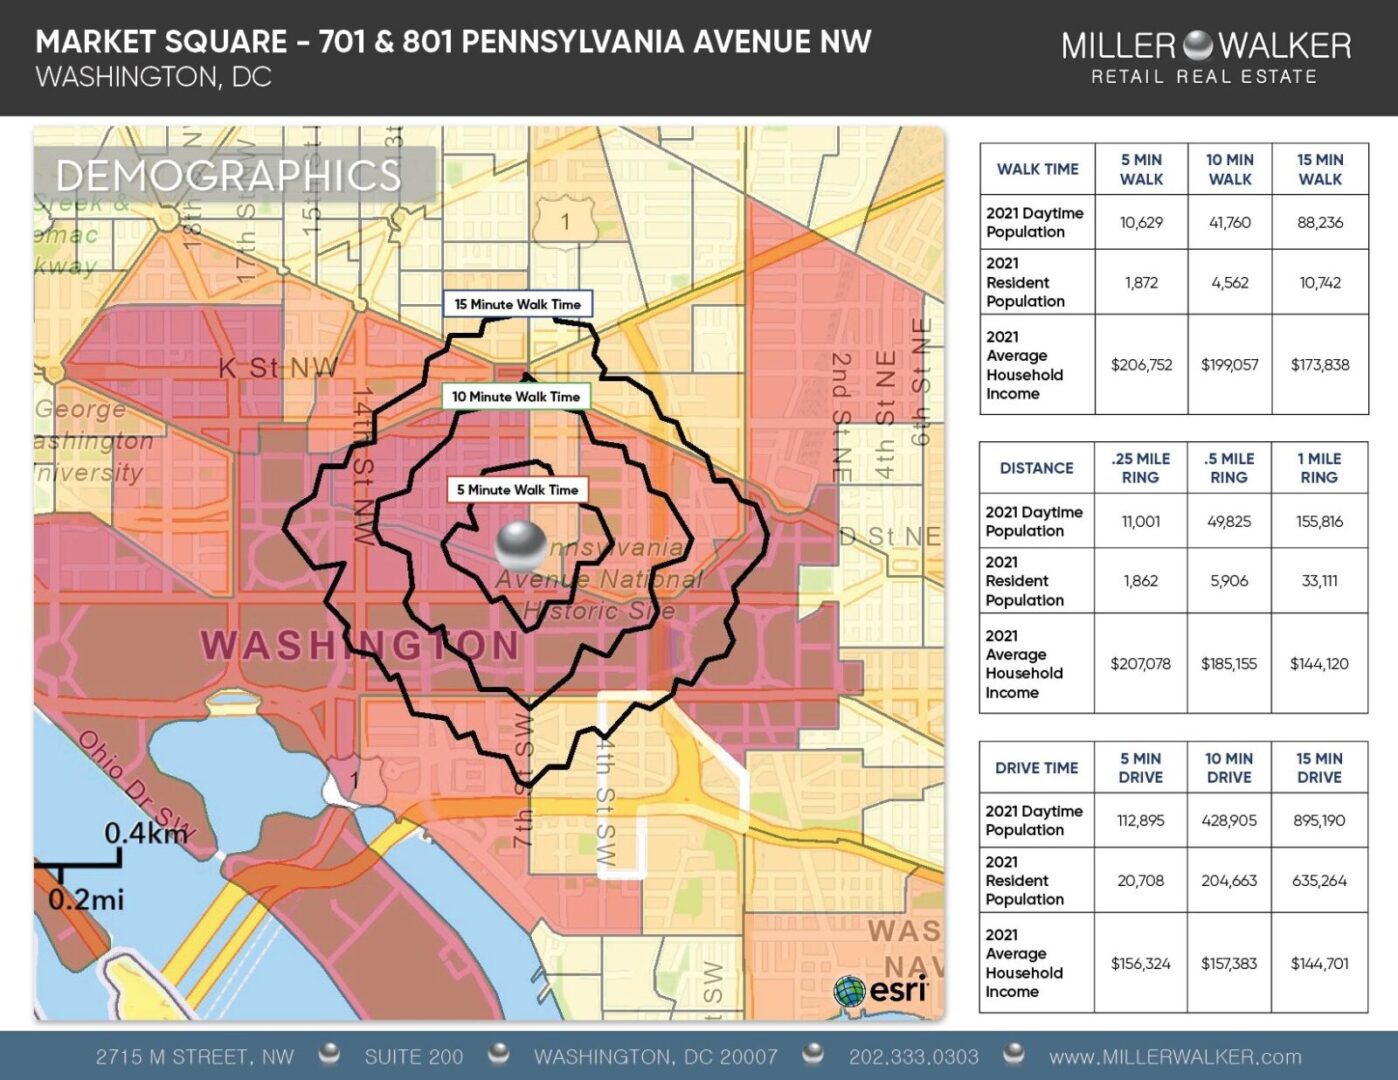 market square 701 pennsylvania avenue walk time demographics total population